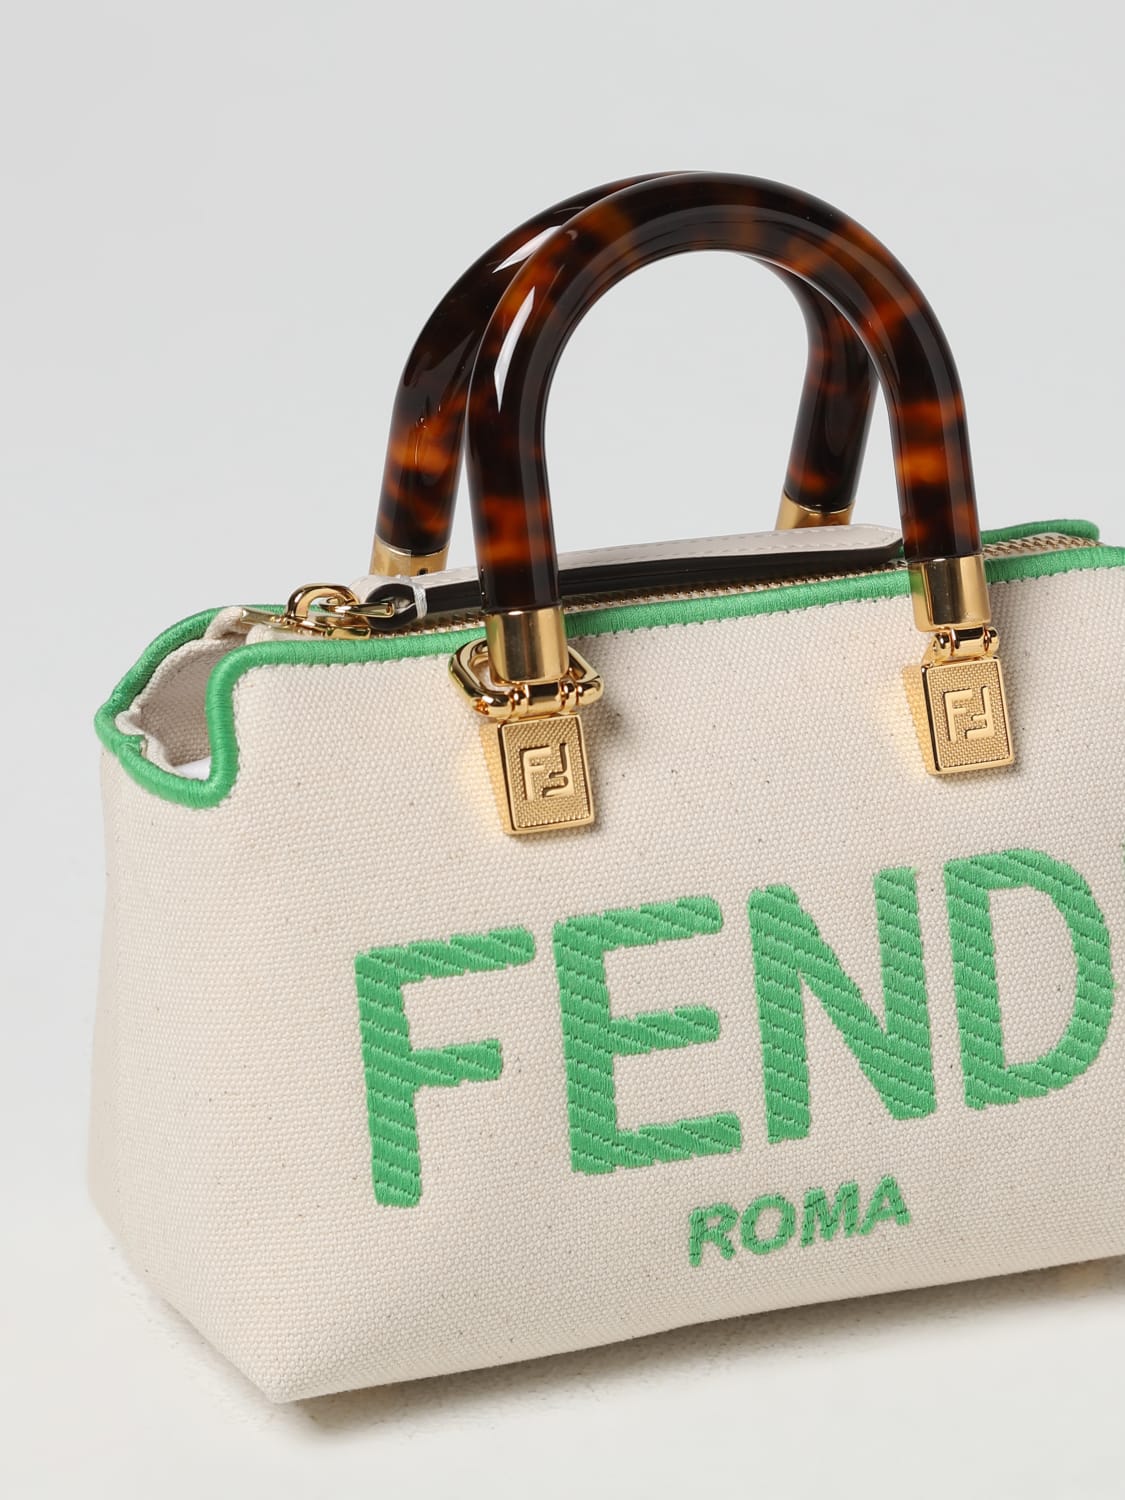 Fendi 2Jour  Fendi 2jours, Fendi bags, Bags